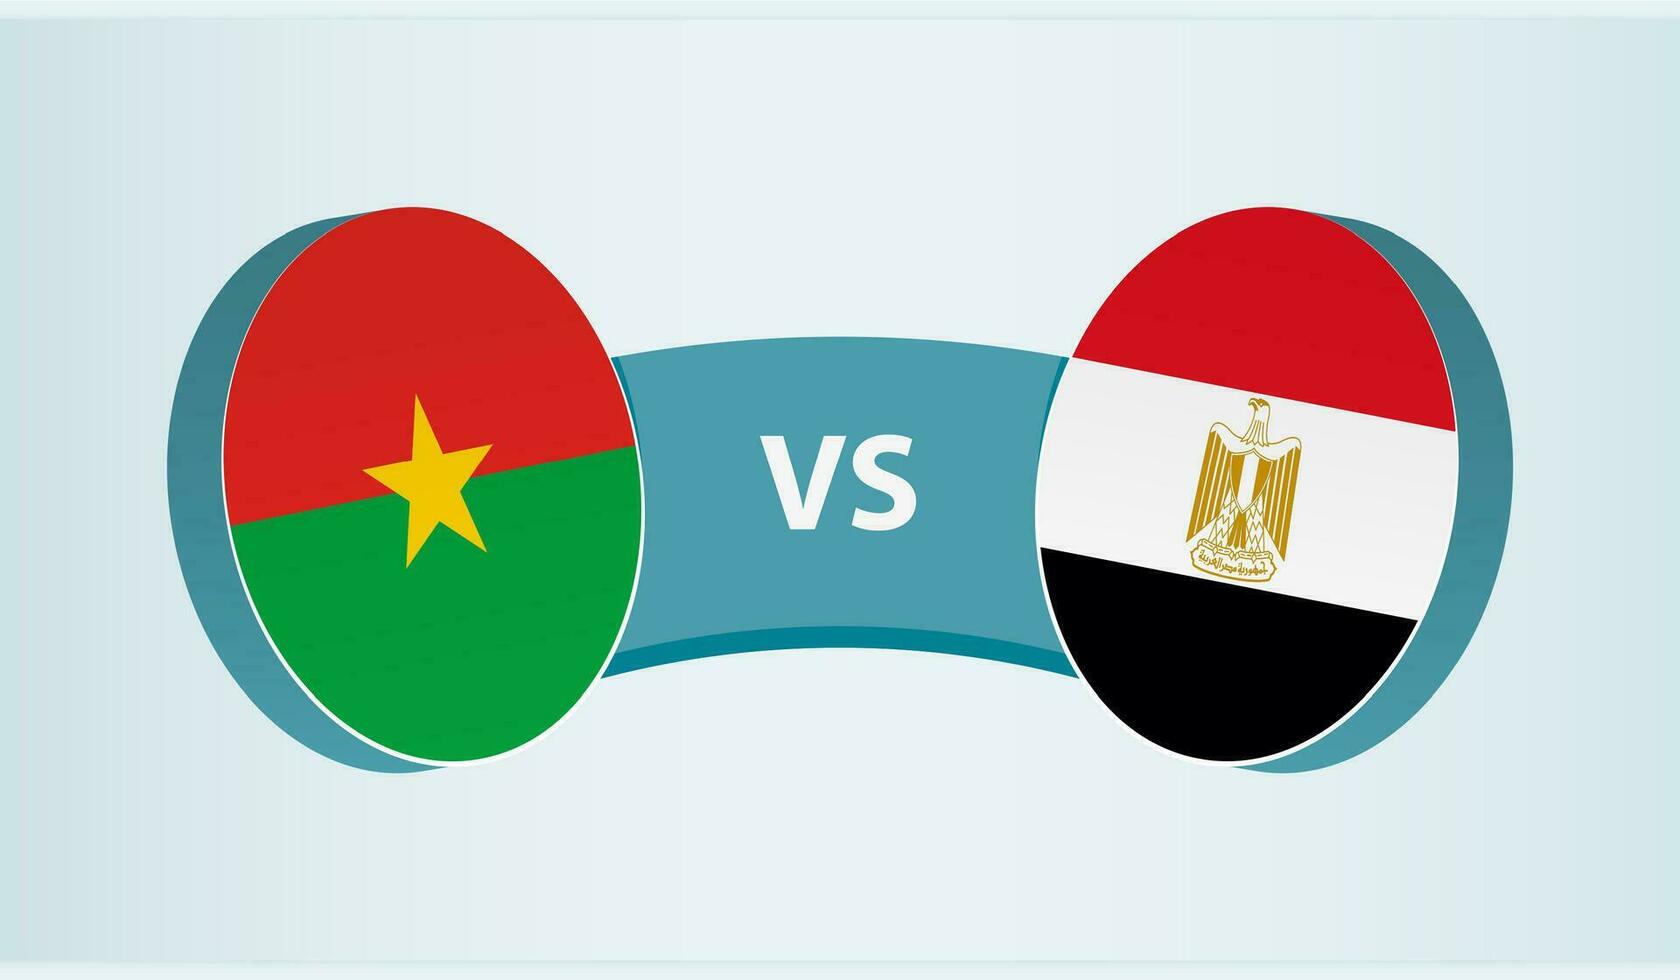 Burkina Faso versus Egypt, team sports competition concept. vector